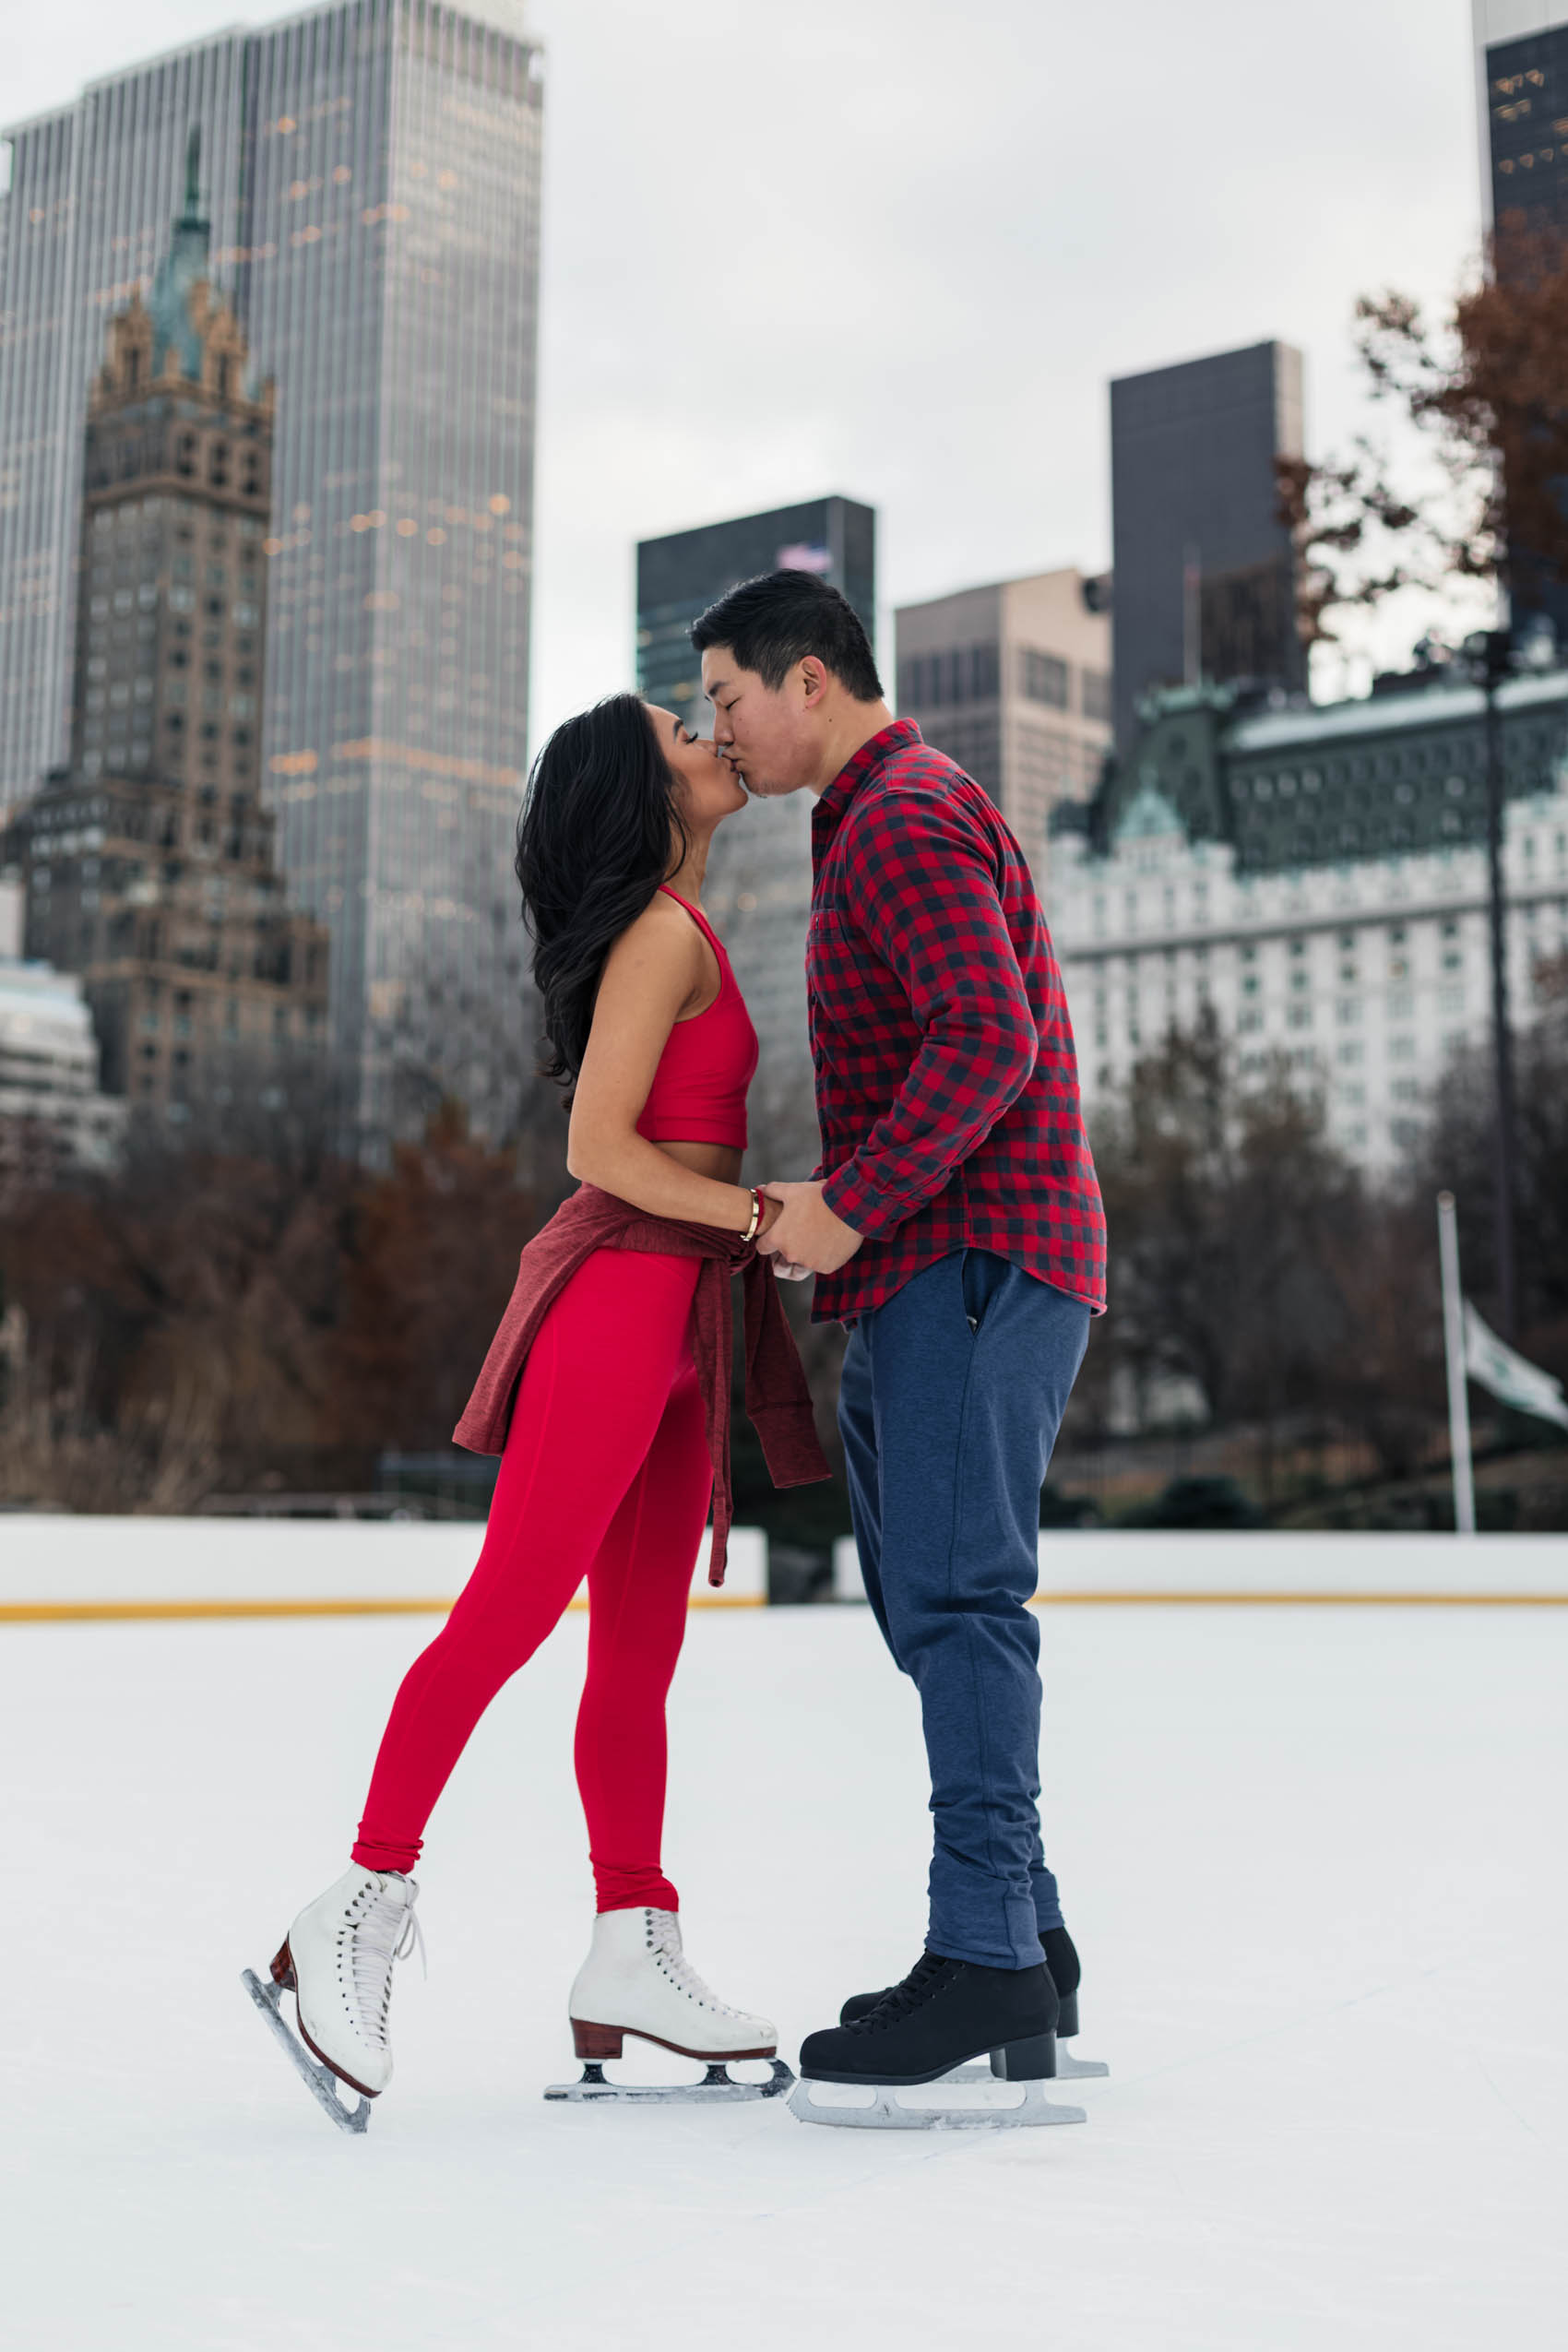 New York City Travel Guide: Blogger Hoang-Kim & Jonathan go ice skating at Wollman Rink in Central Park